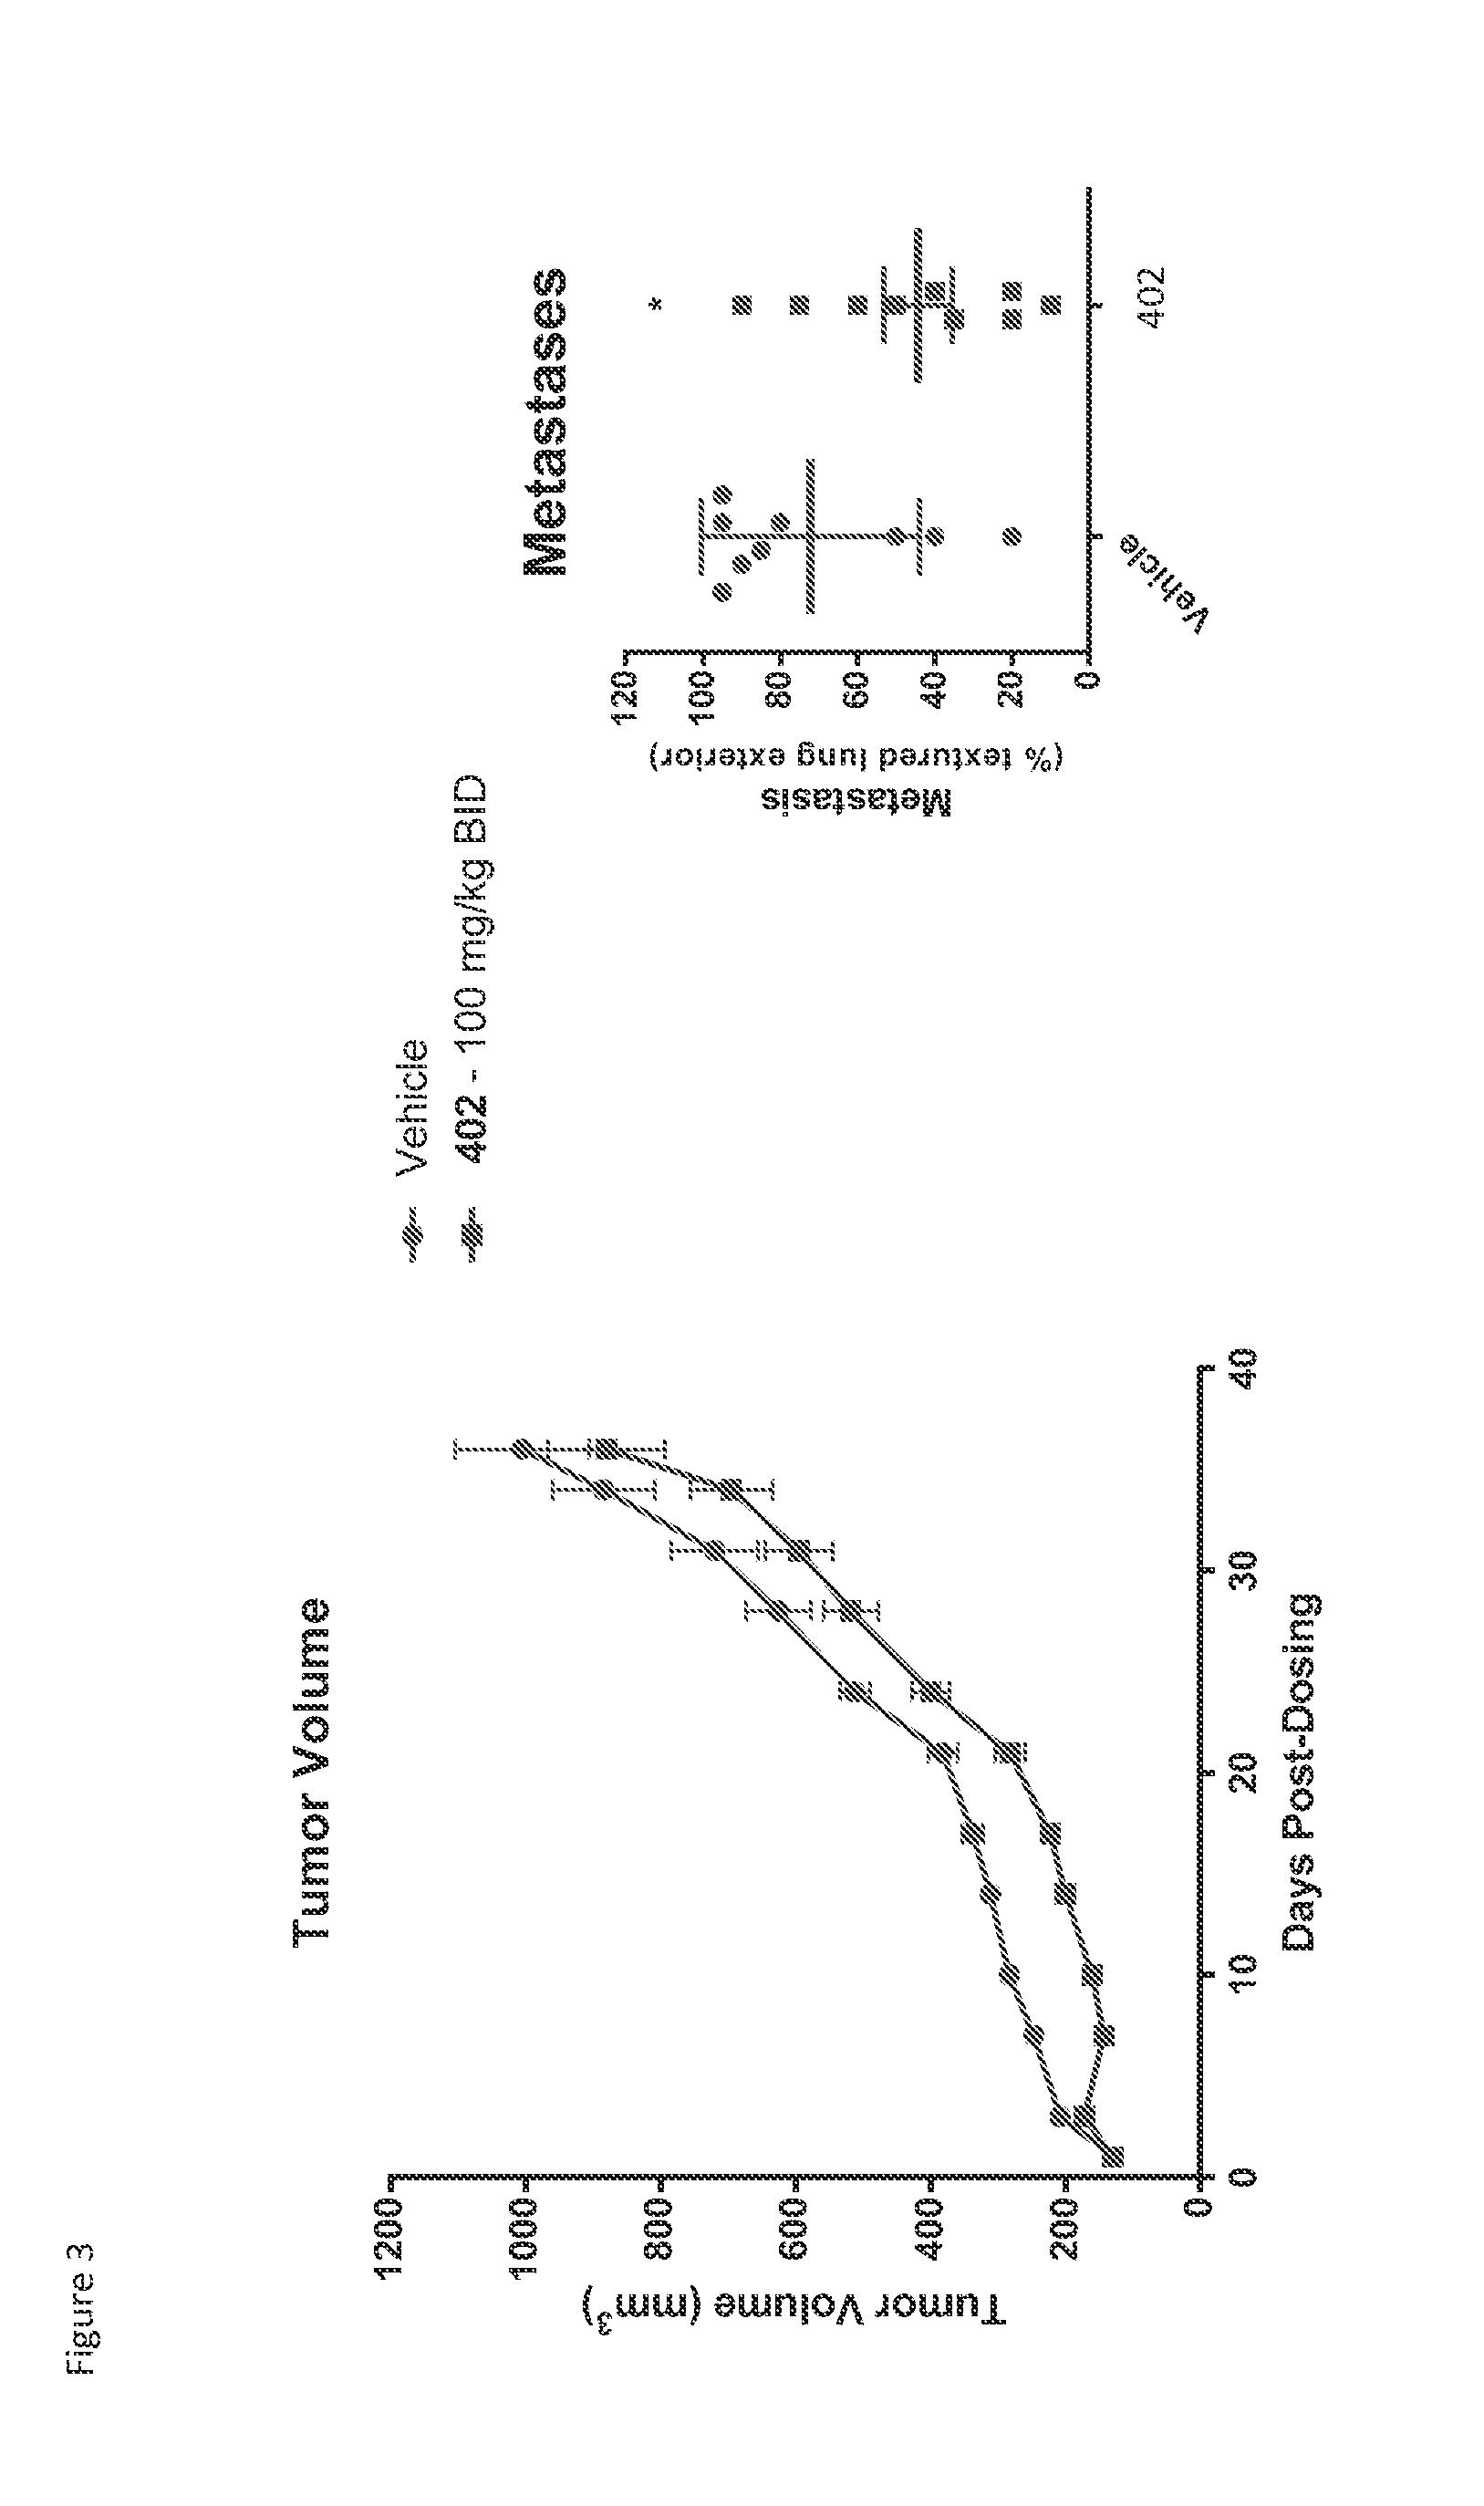 Treatment of cancer with heterocyclic inhibitors of glutaminase